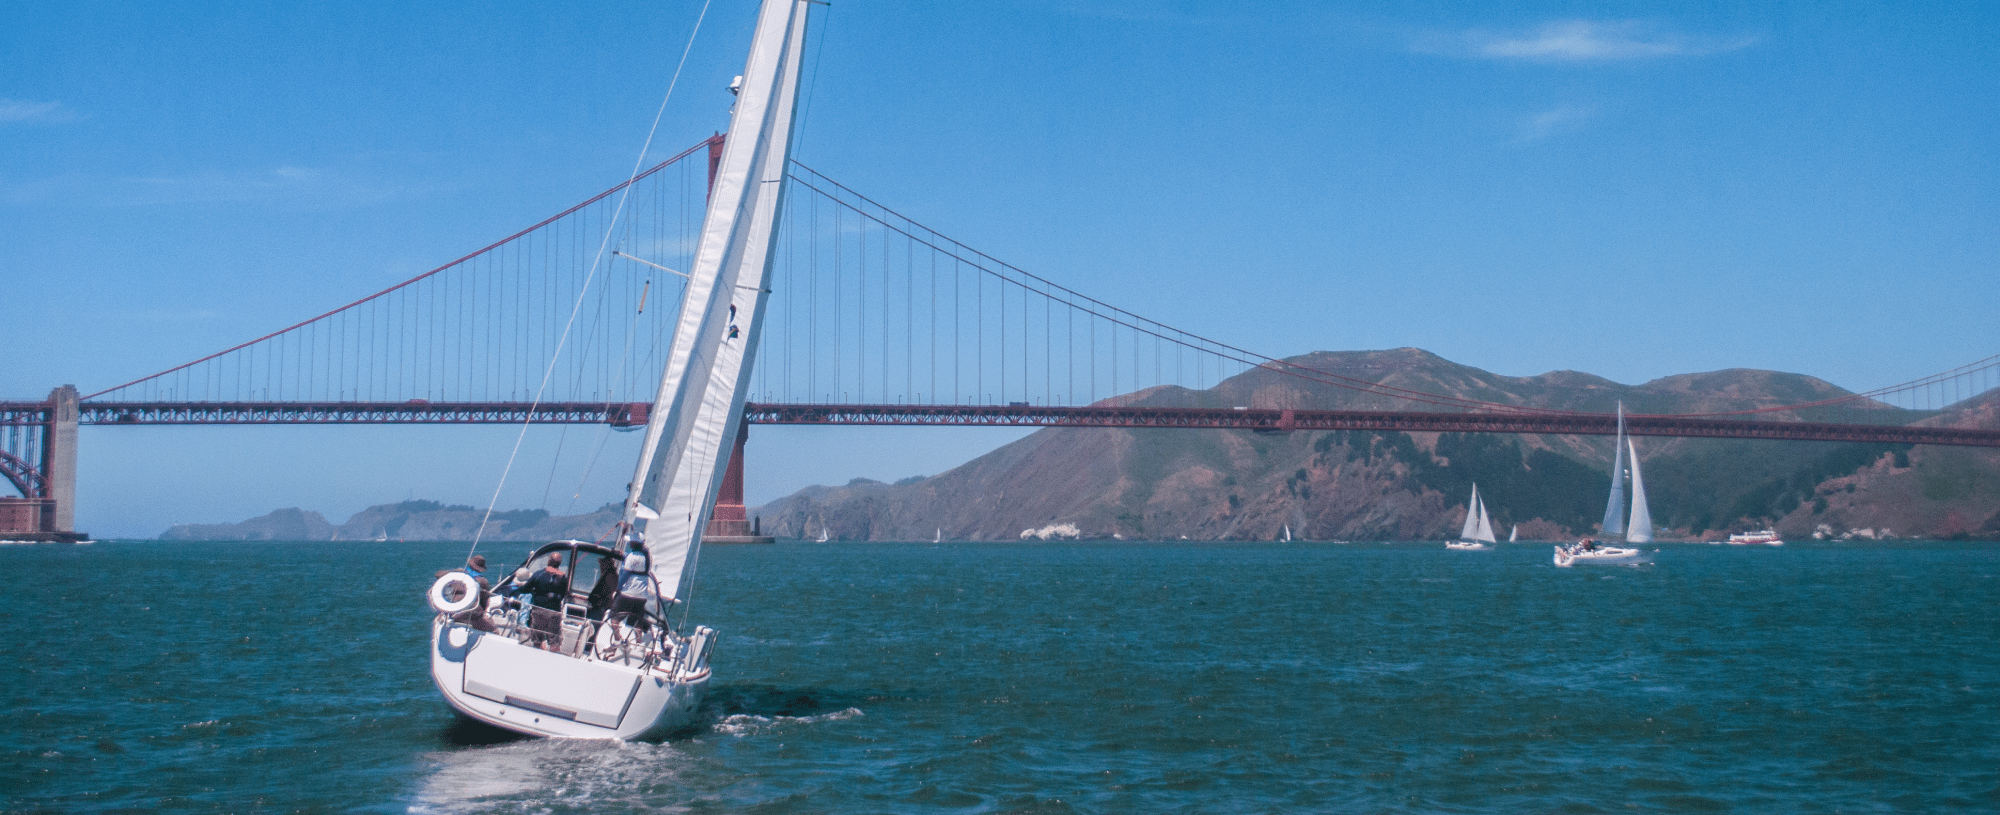 Well-trimmed sailboat heading for the Golden Gate bridge